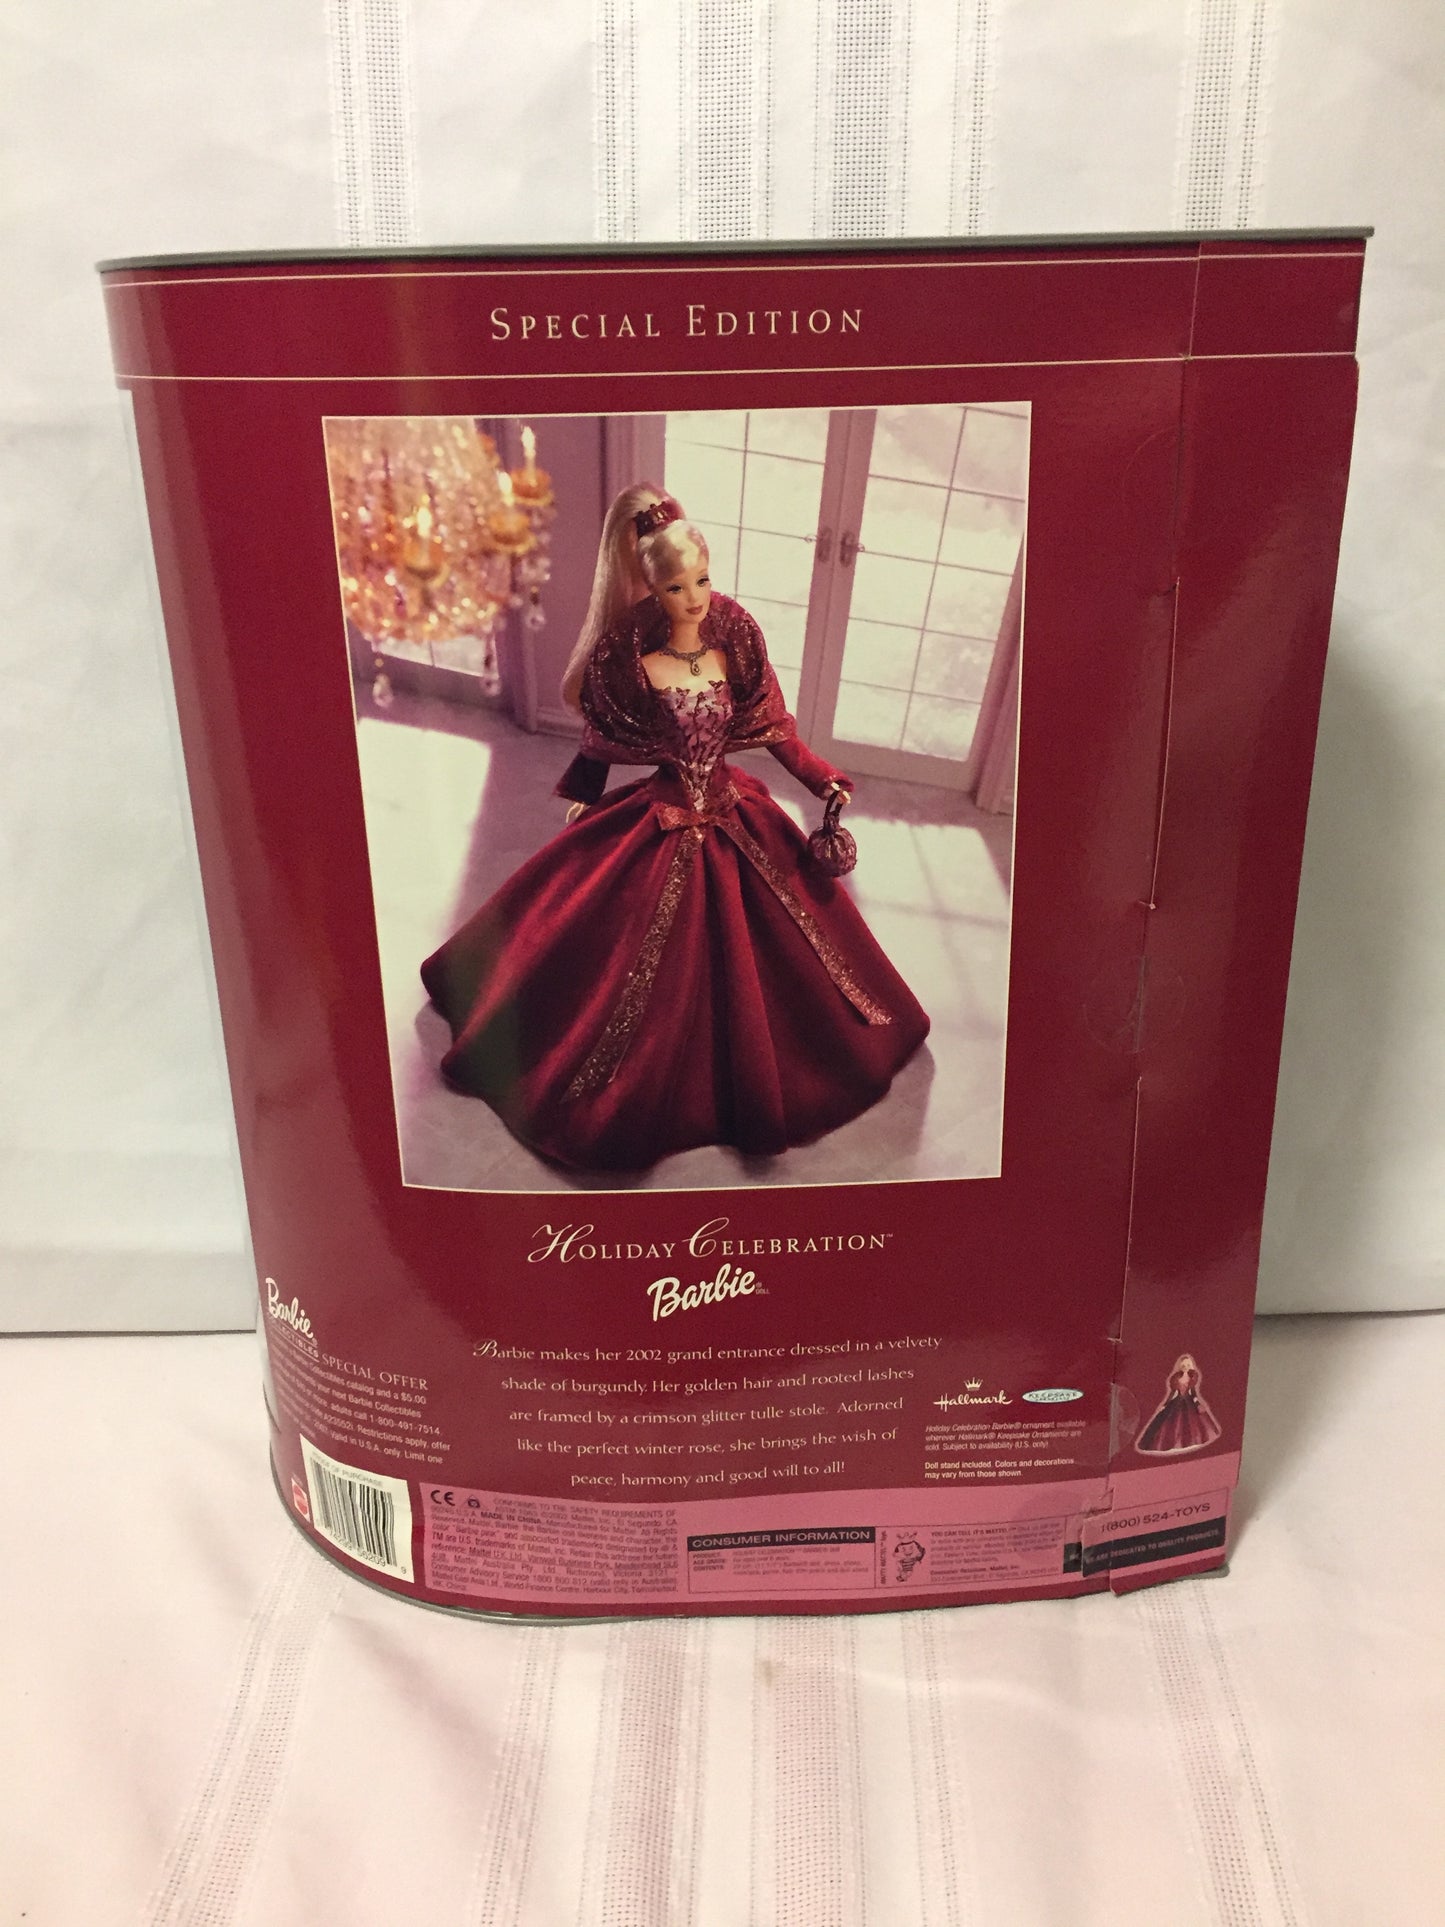 Special Edition 2002 Holiday Celebration Barbie #56209 Hallmark Mattel NRB